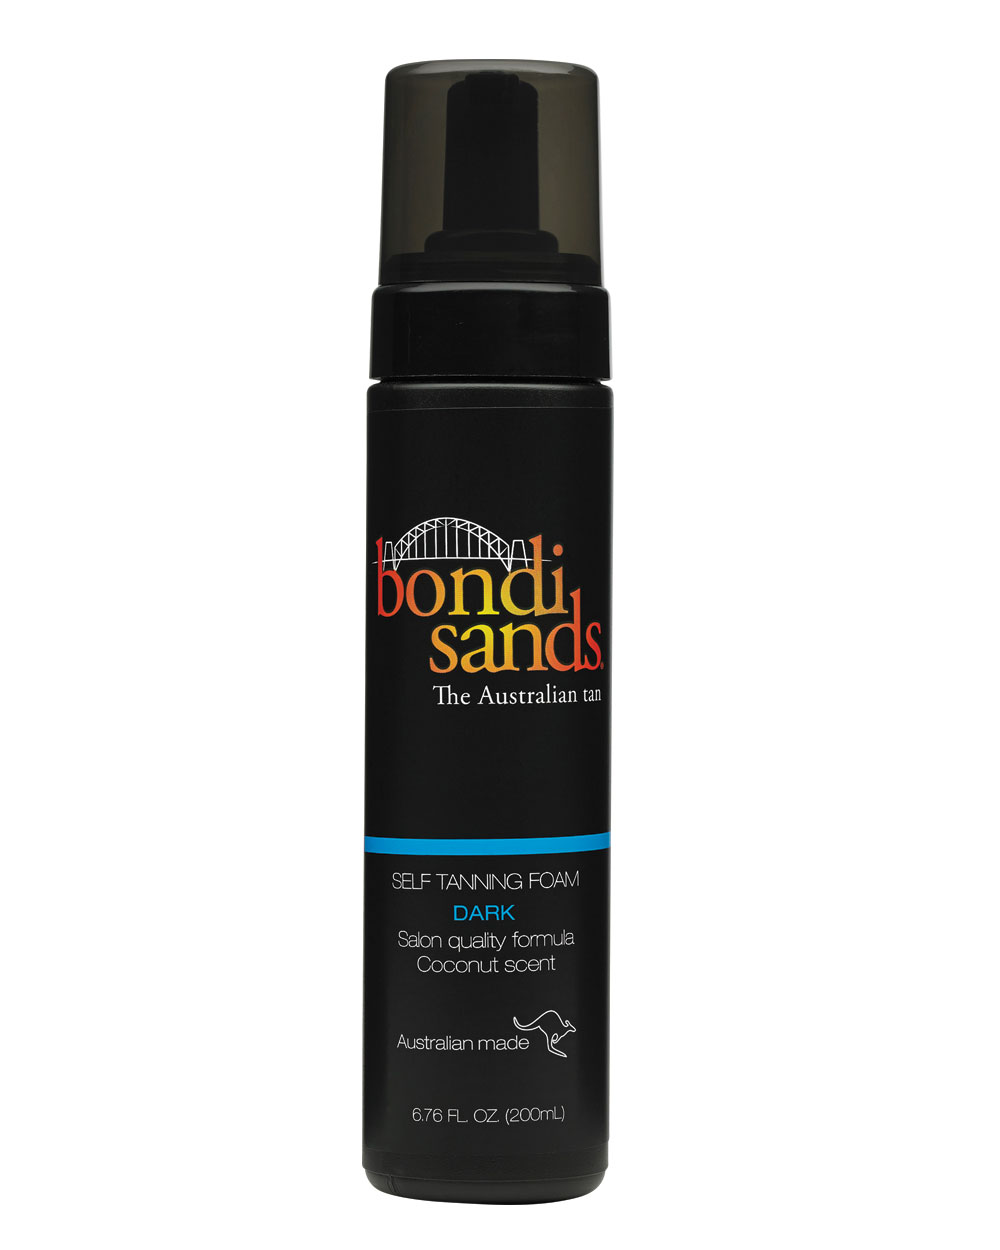 Bondi Sands Self-Tanning Foam Dark, $24.99